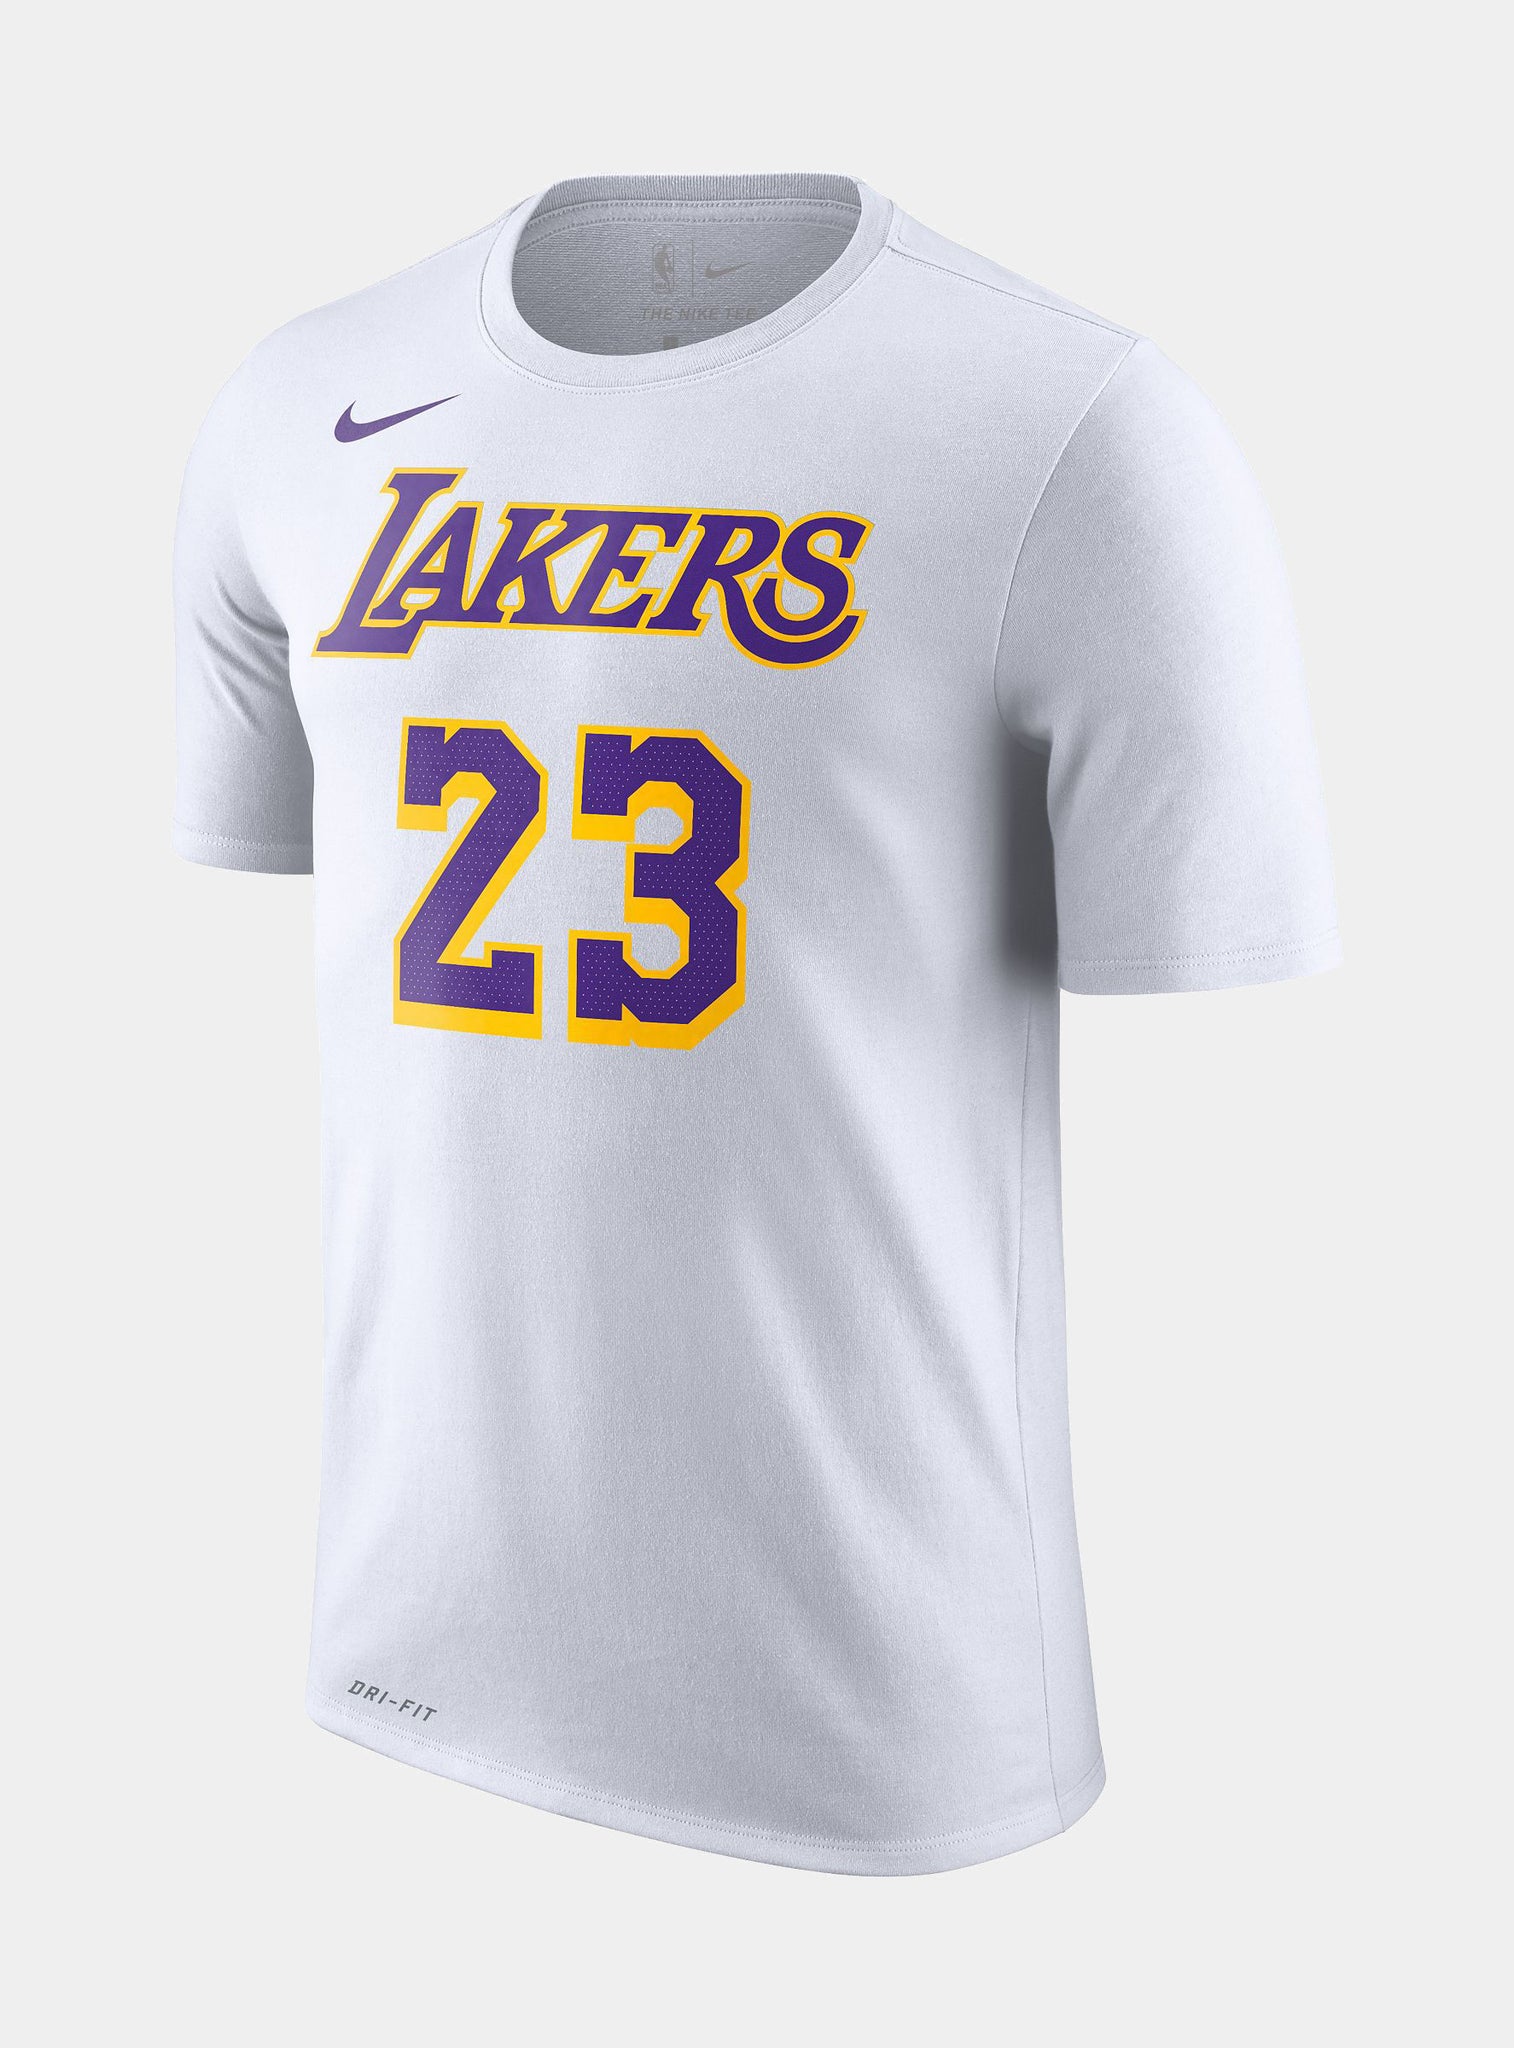 Nike Men's Los Angeles Lakers Nba Dri-fit Practice T-shirt, White